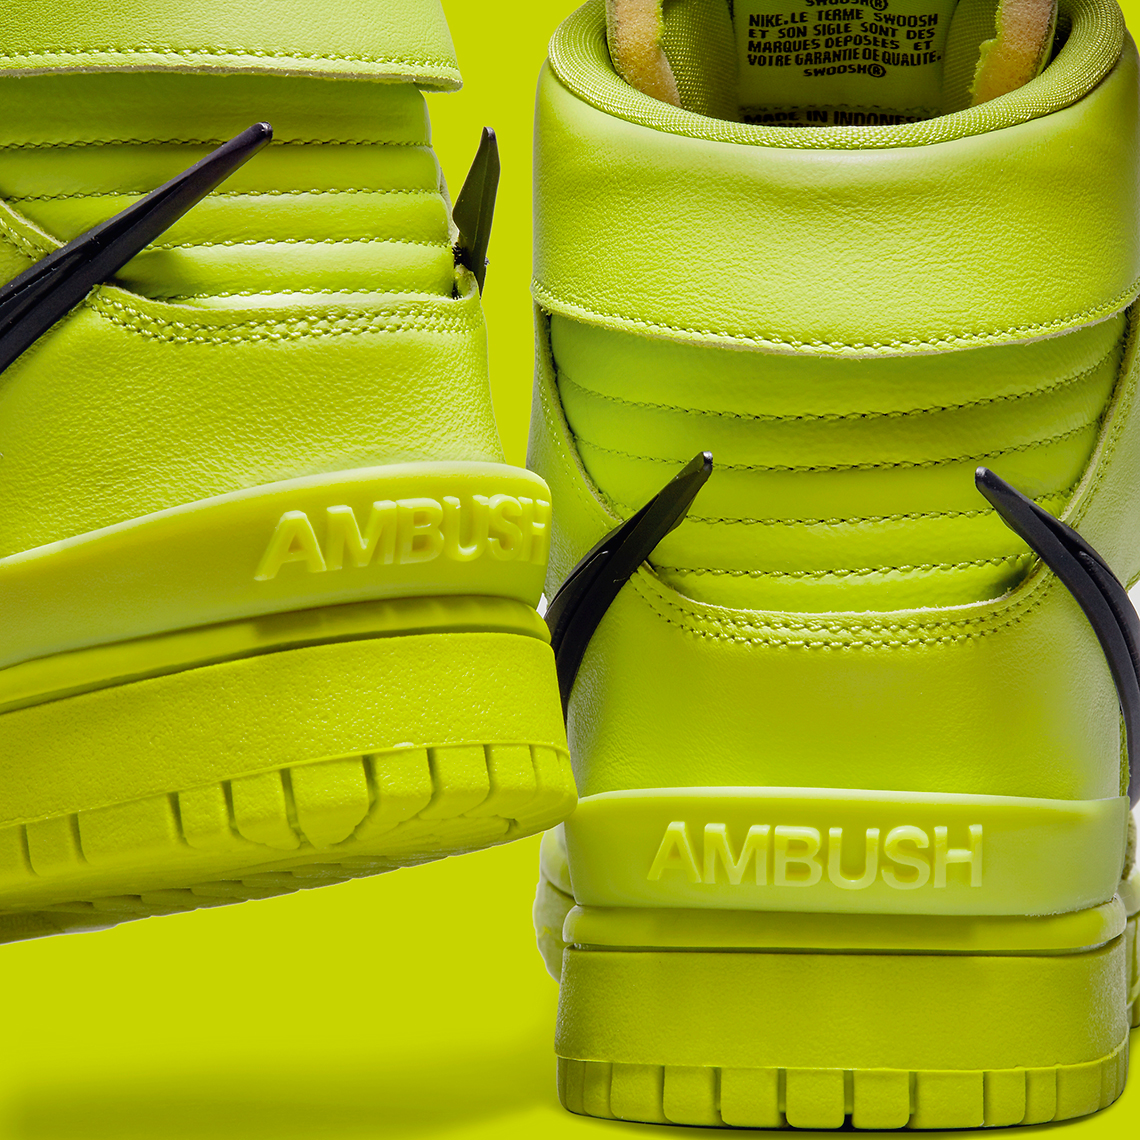 Ambush vintage nike presto running shoes for women cheap Atomic Green Cu7544 300 Release Date 7